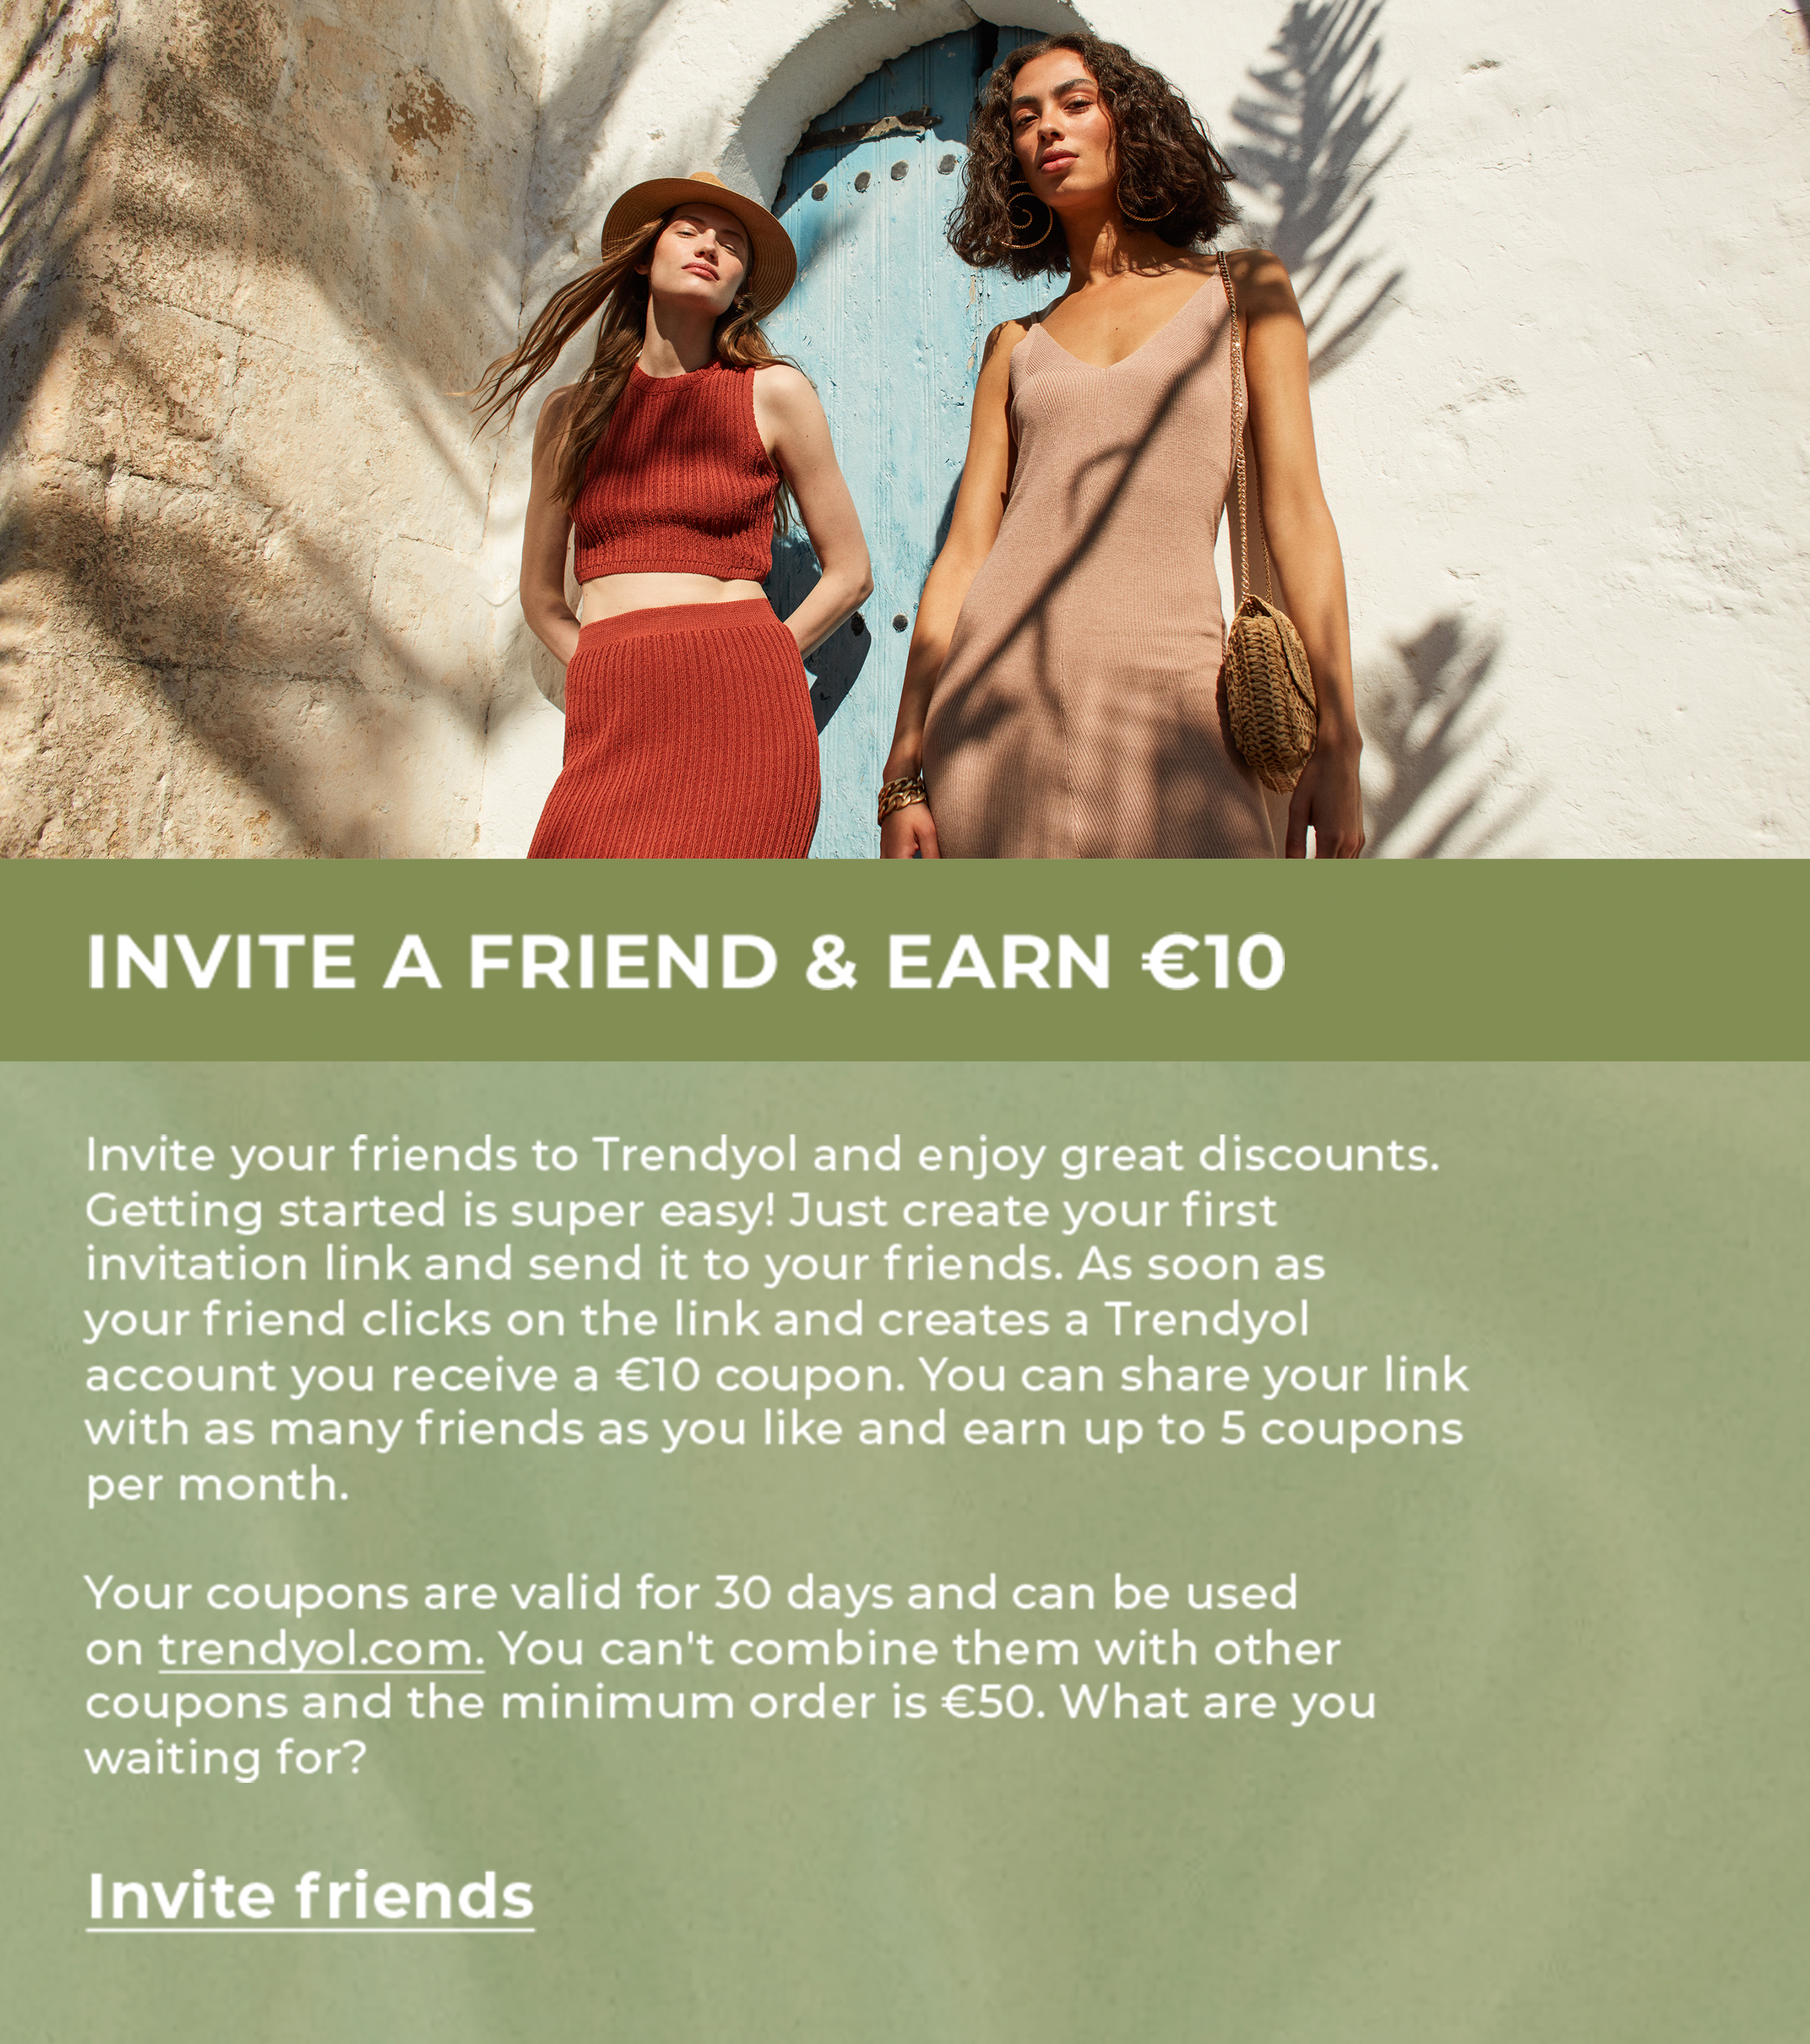 Invite a friend & earn €10